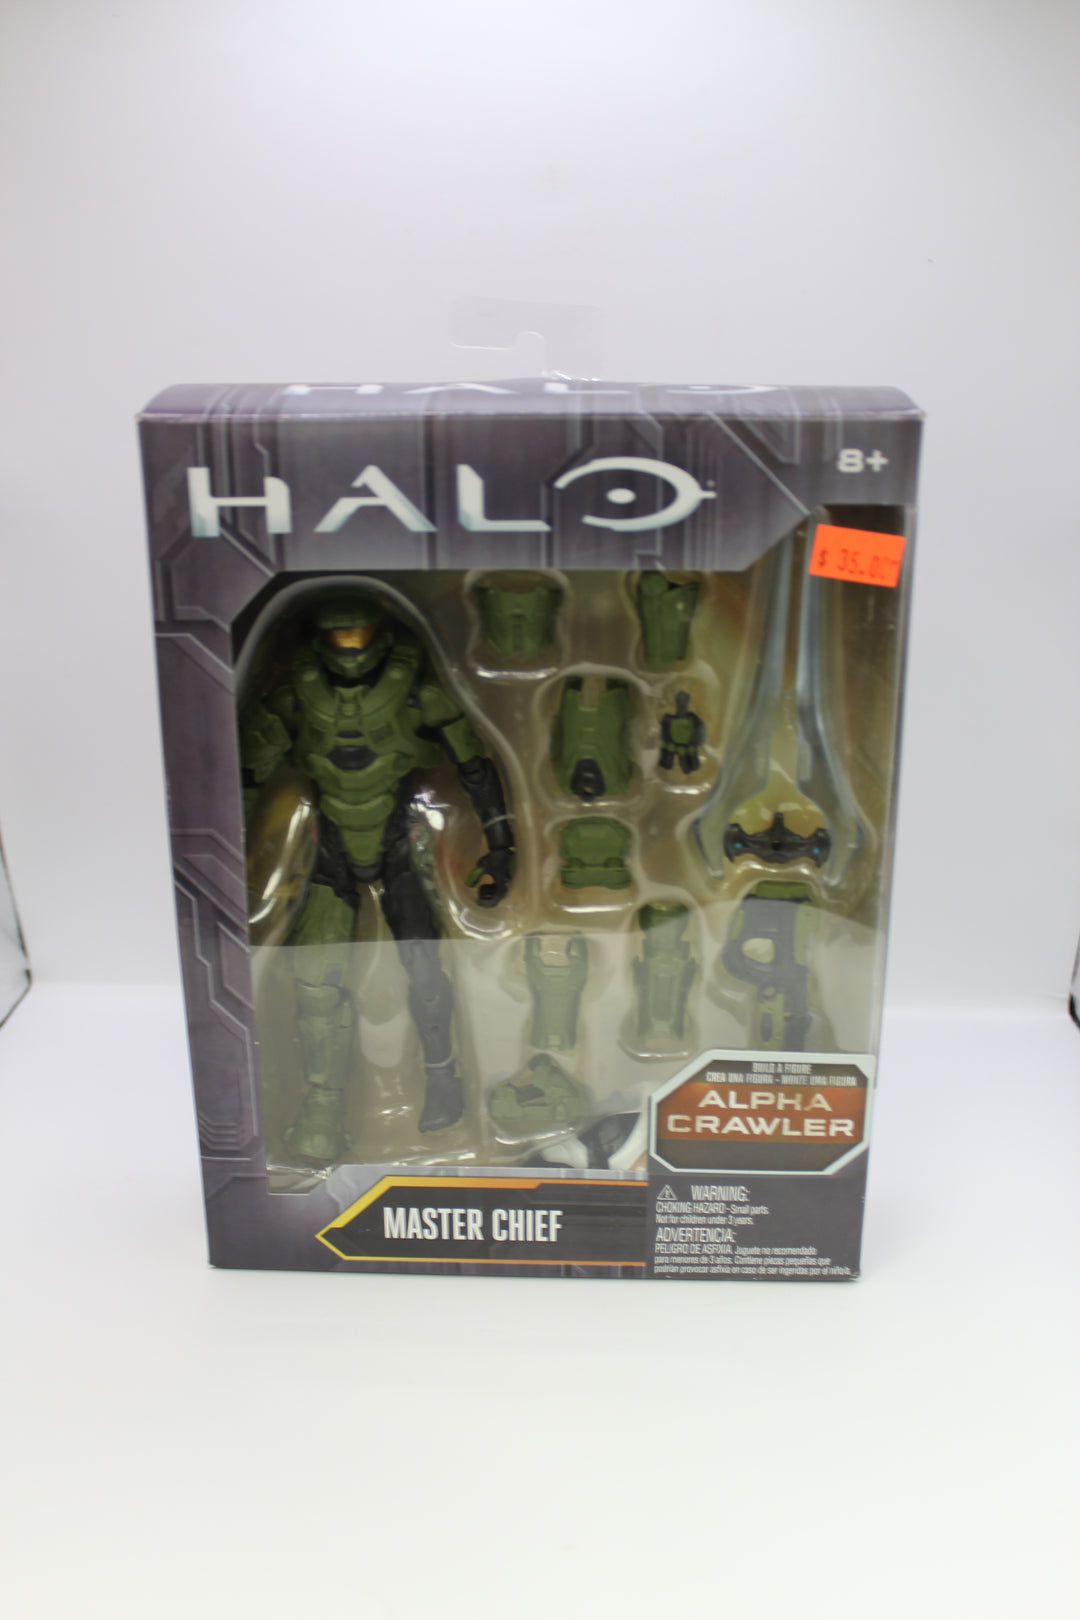 2016 Halo 5: Guardians Master Chief Figure